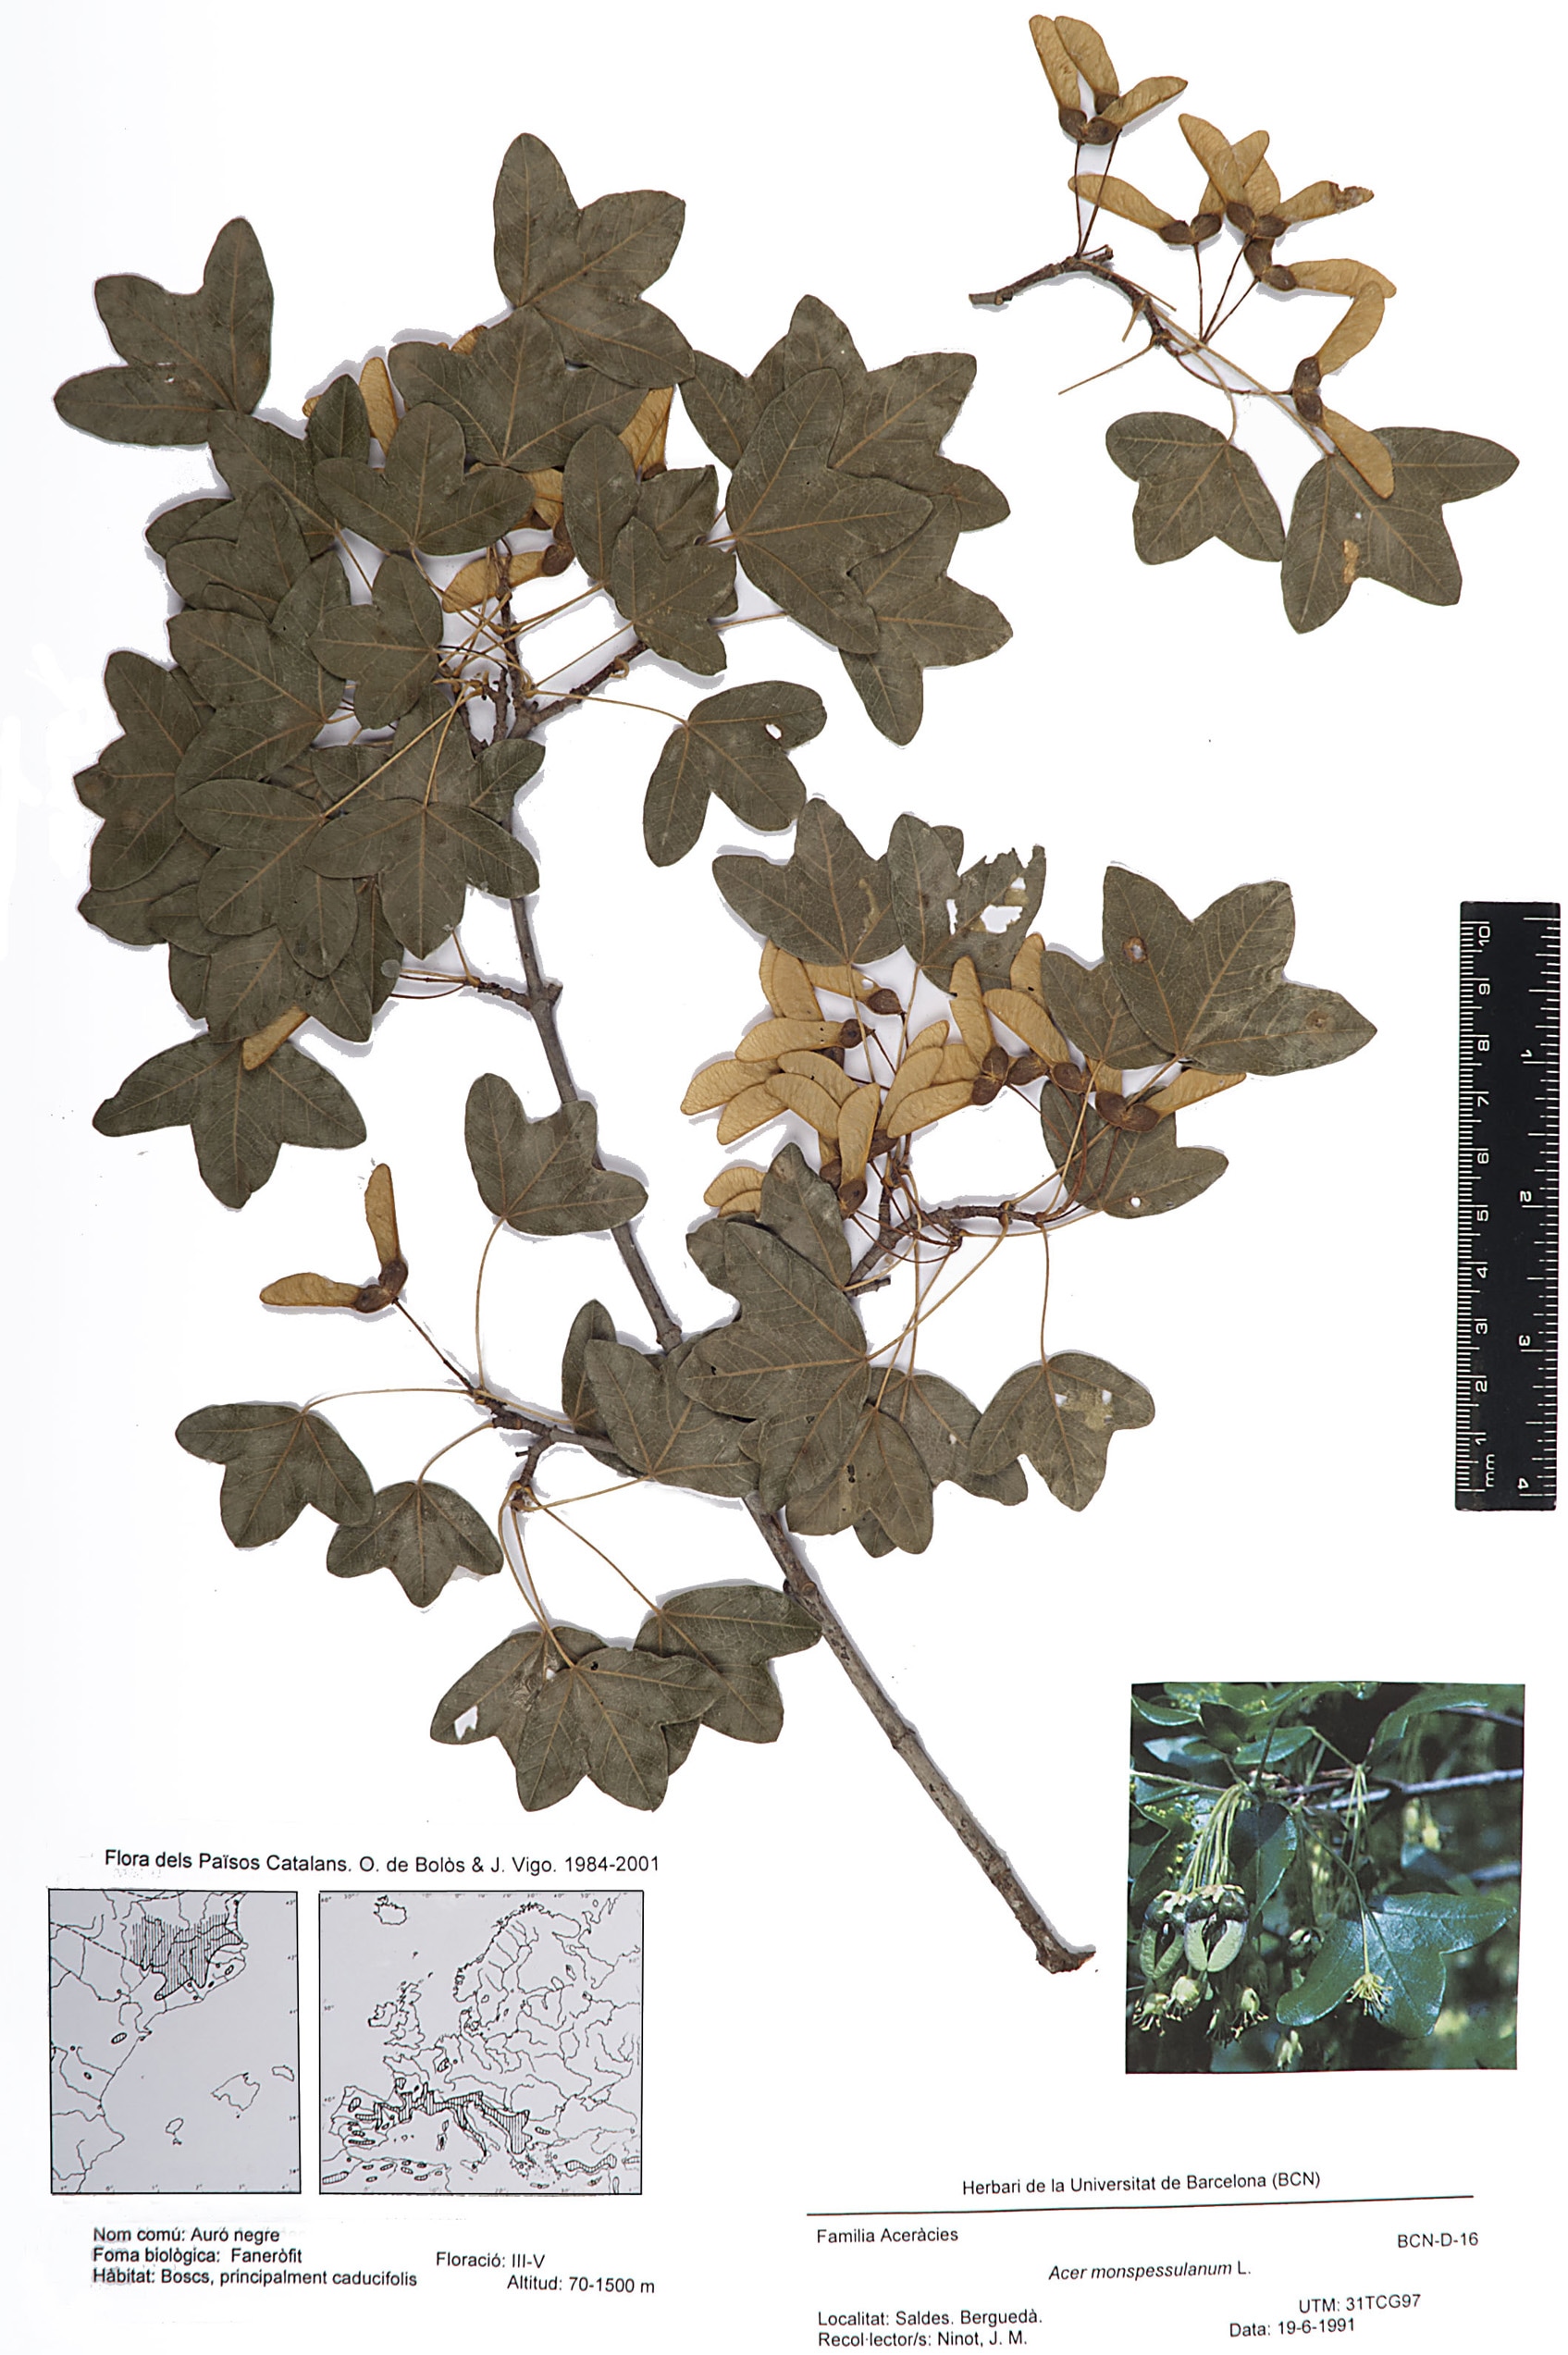 Acer monspessulanum L. (Auró negre)